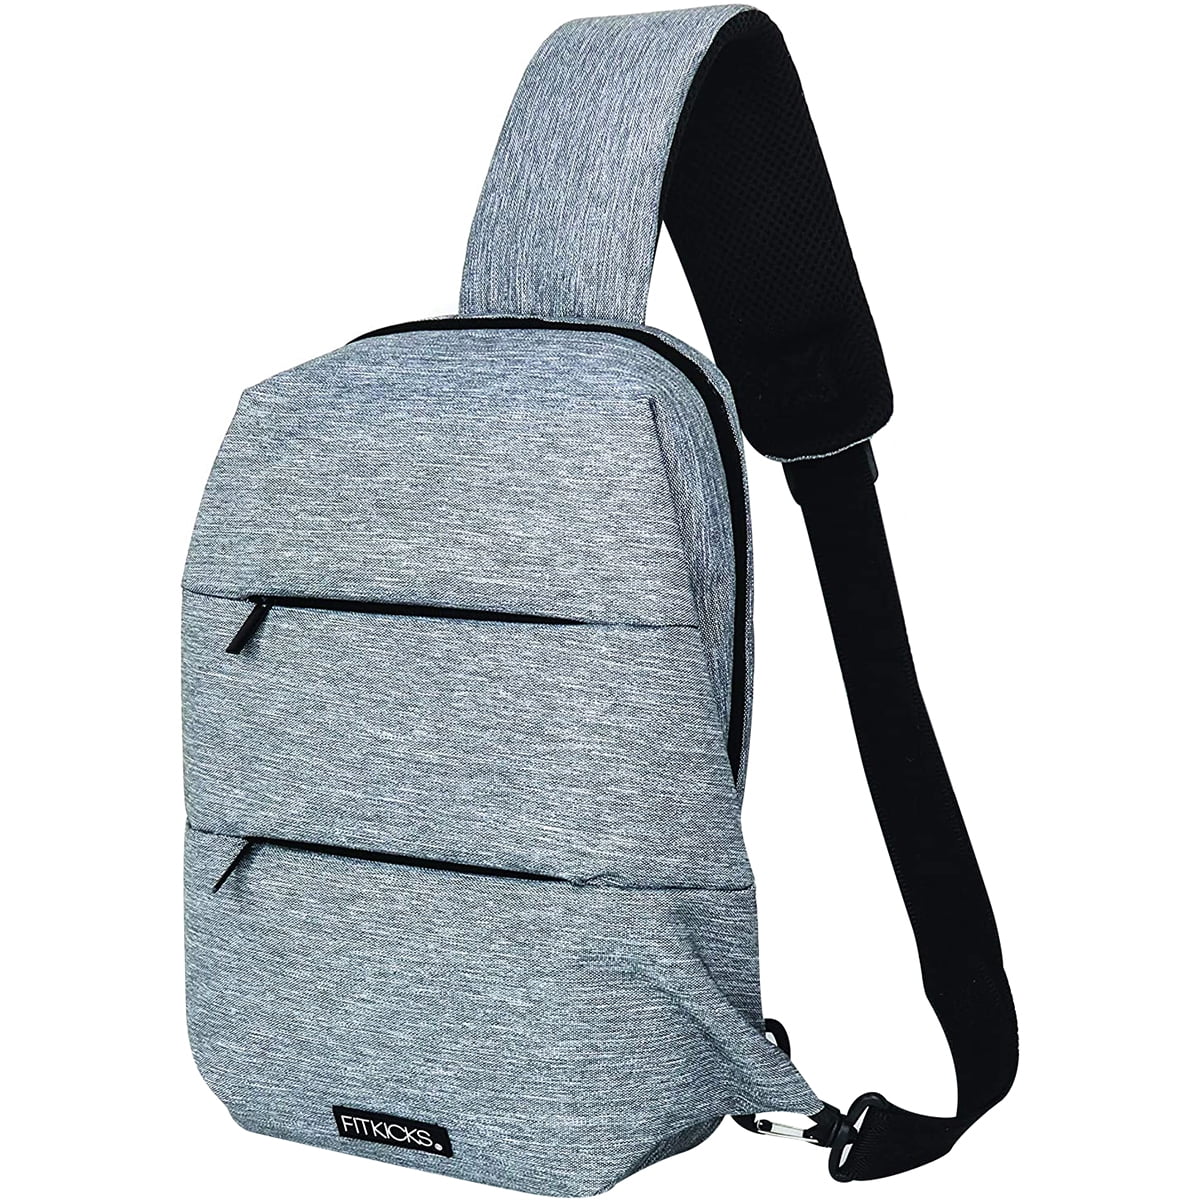 Fitkicks Latitude Active Lifestyle Sling Bag Backpack - Walmart.com